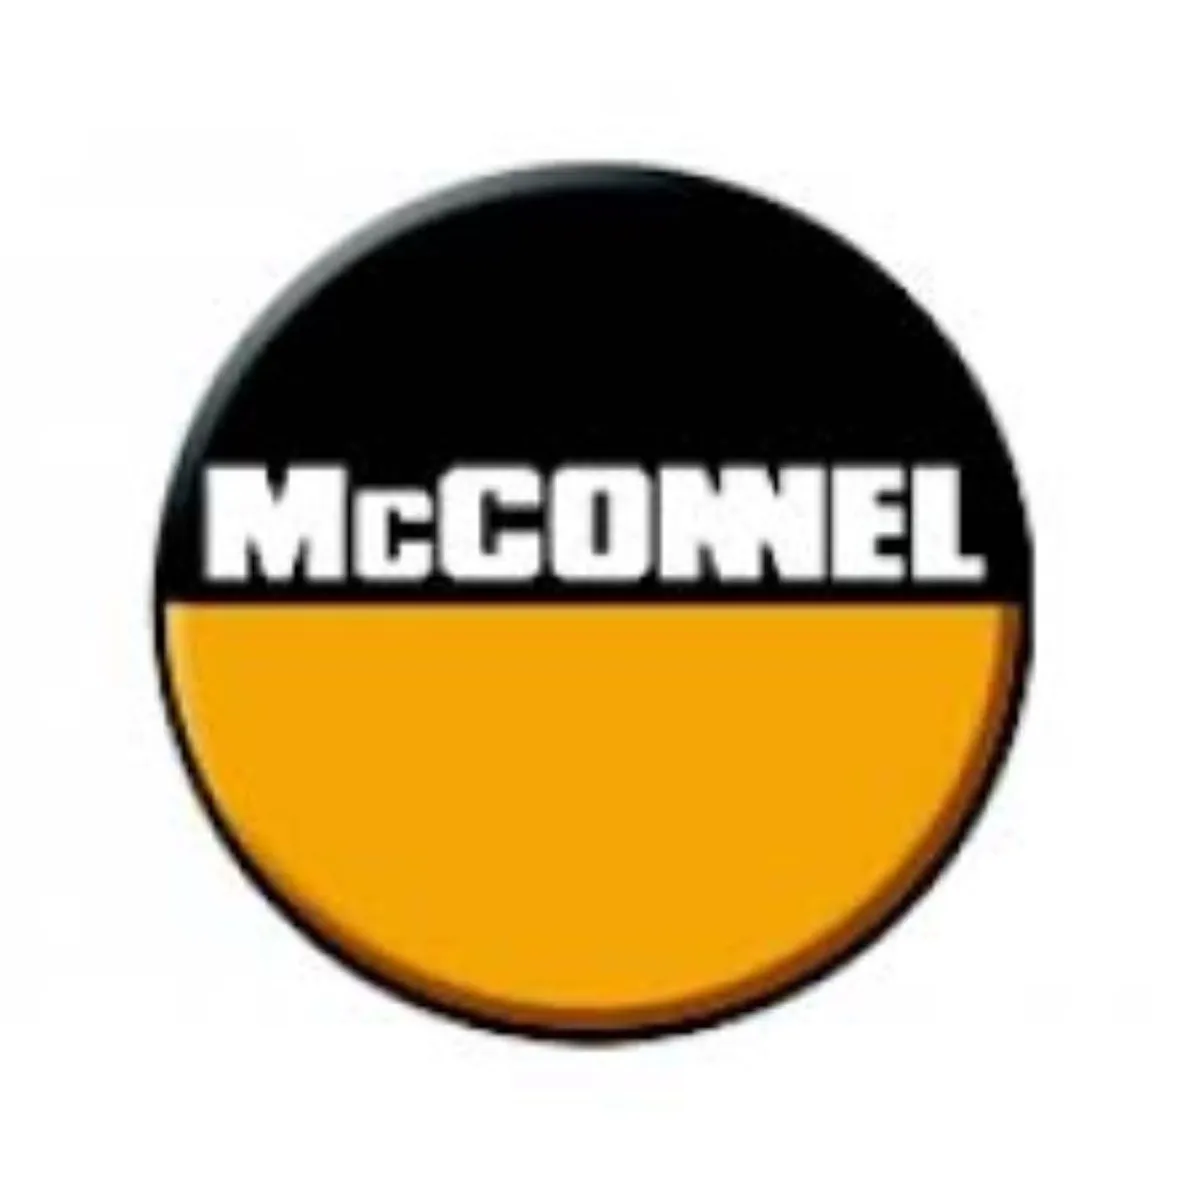 Full range of McConnel parts